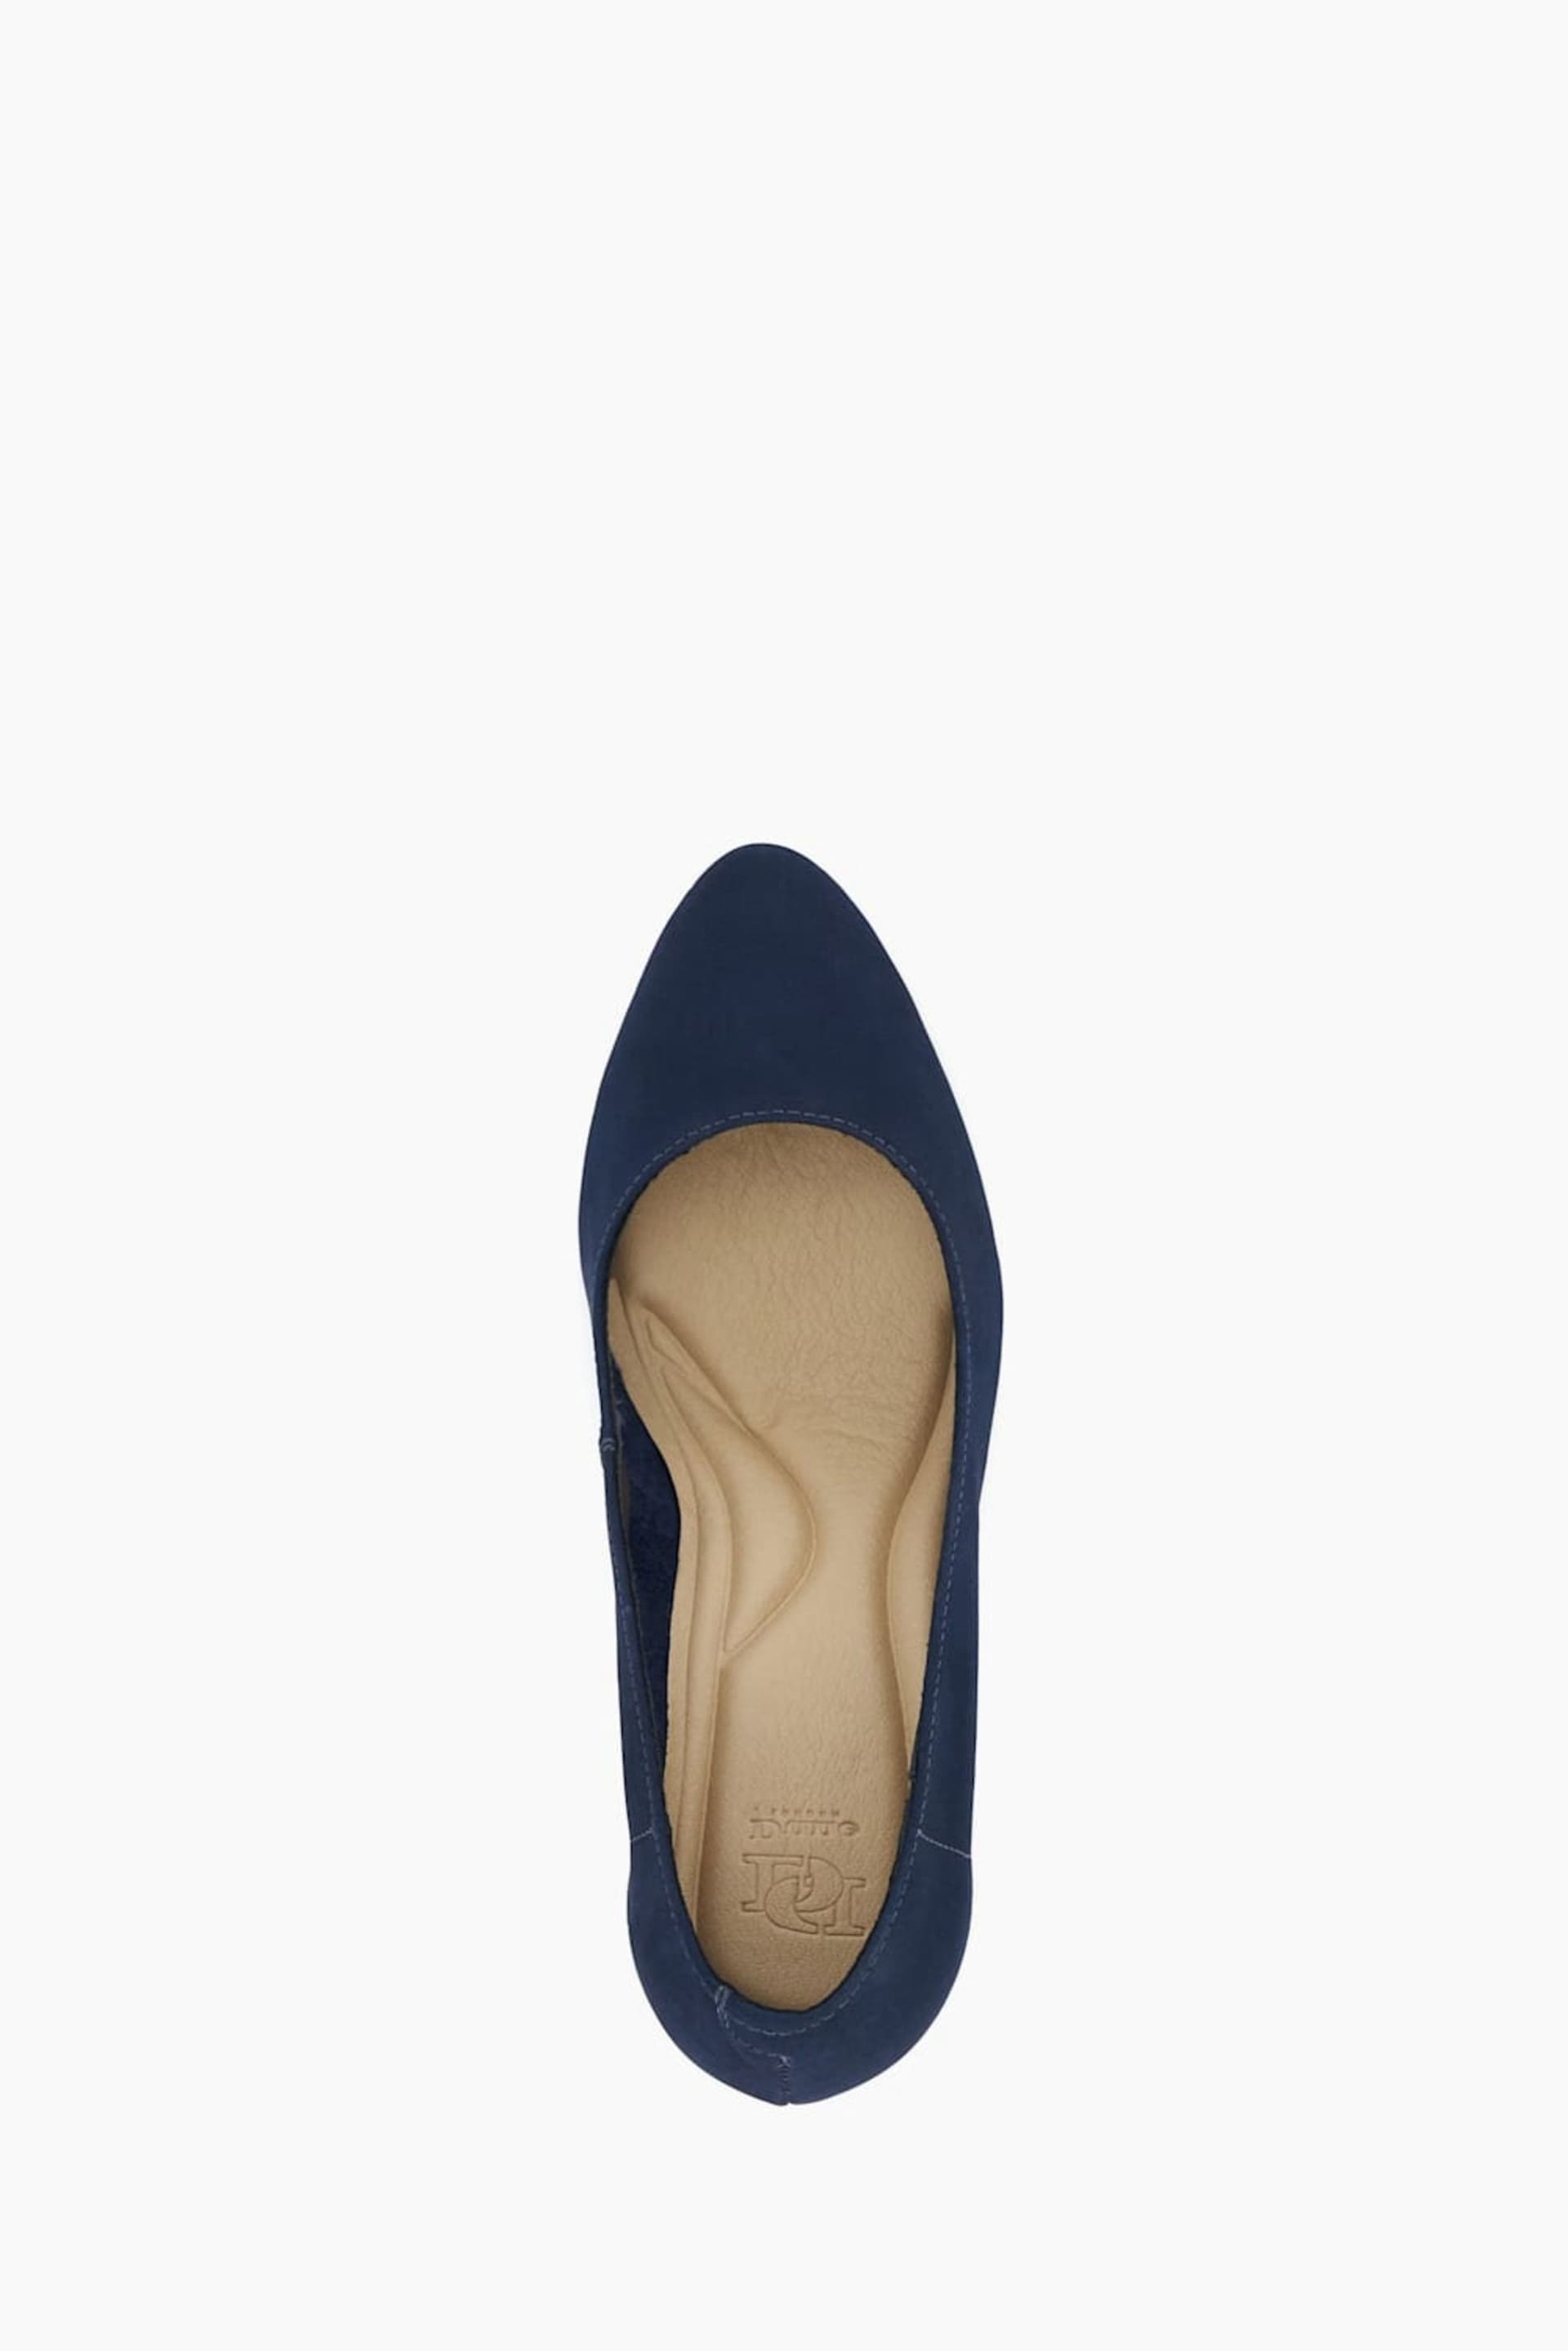 Dune London Blue Adele New Comfort Shoes - Image 6 of 6